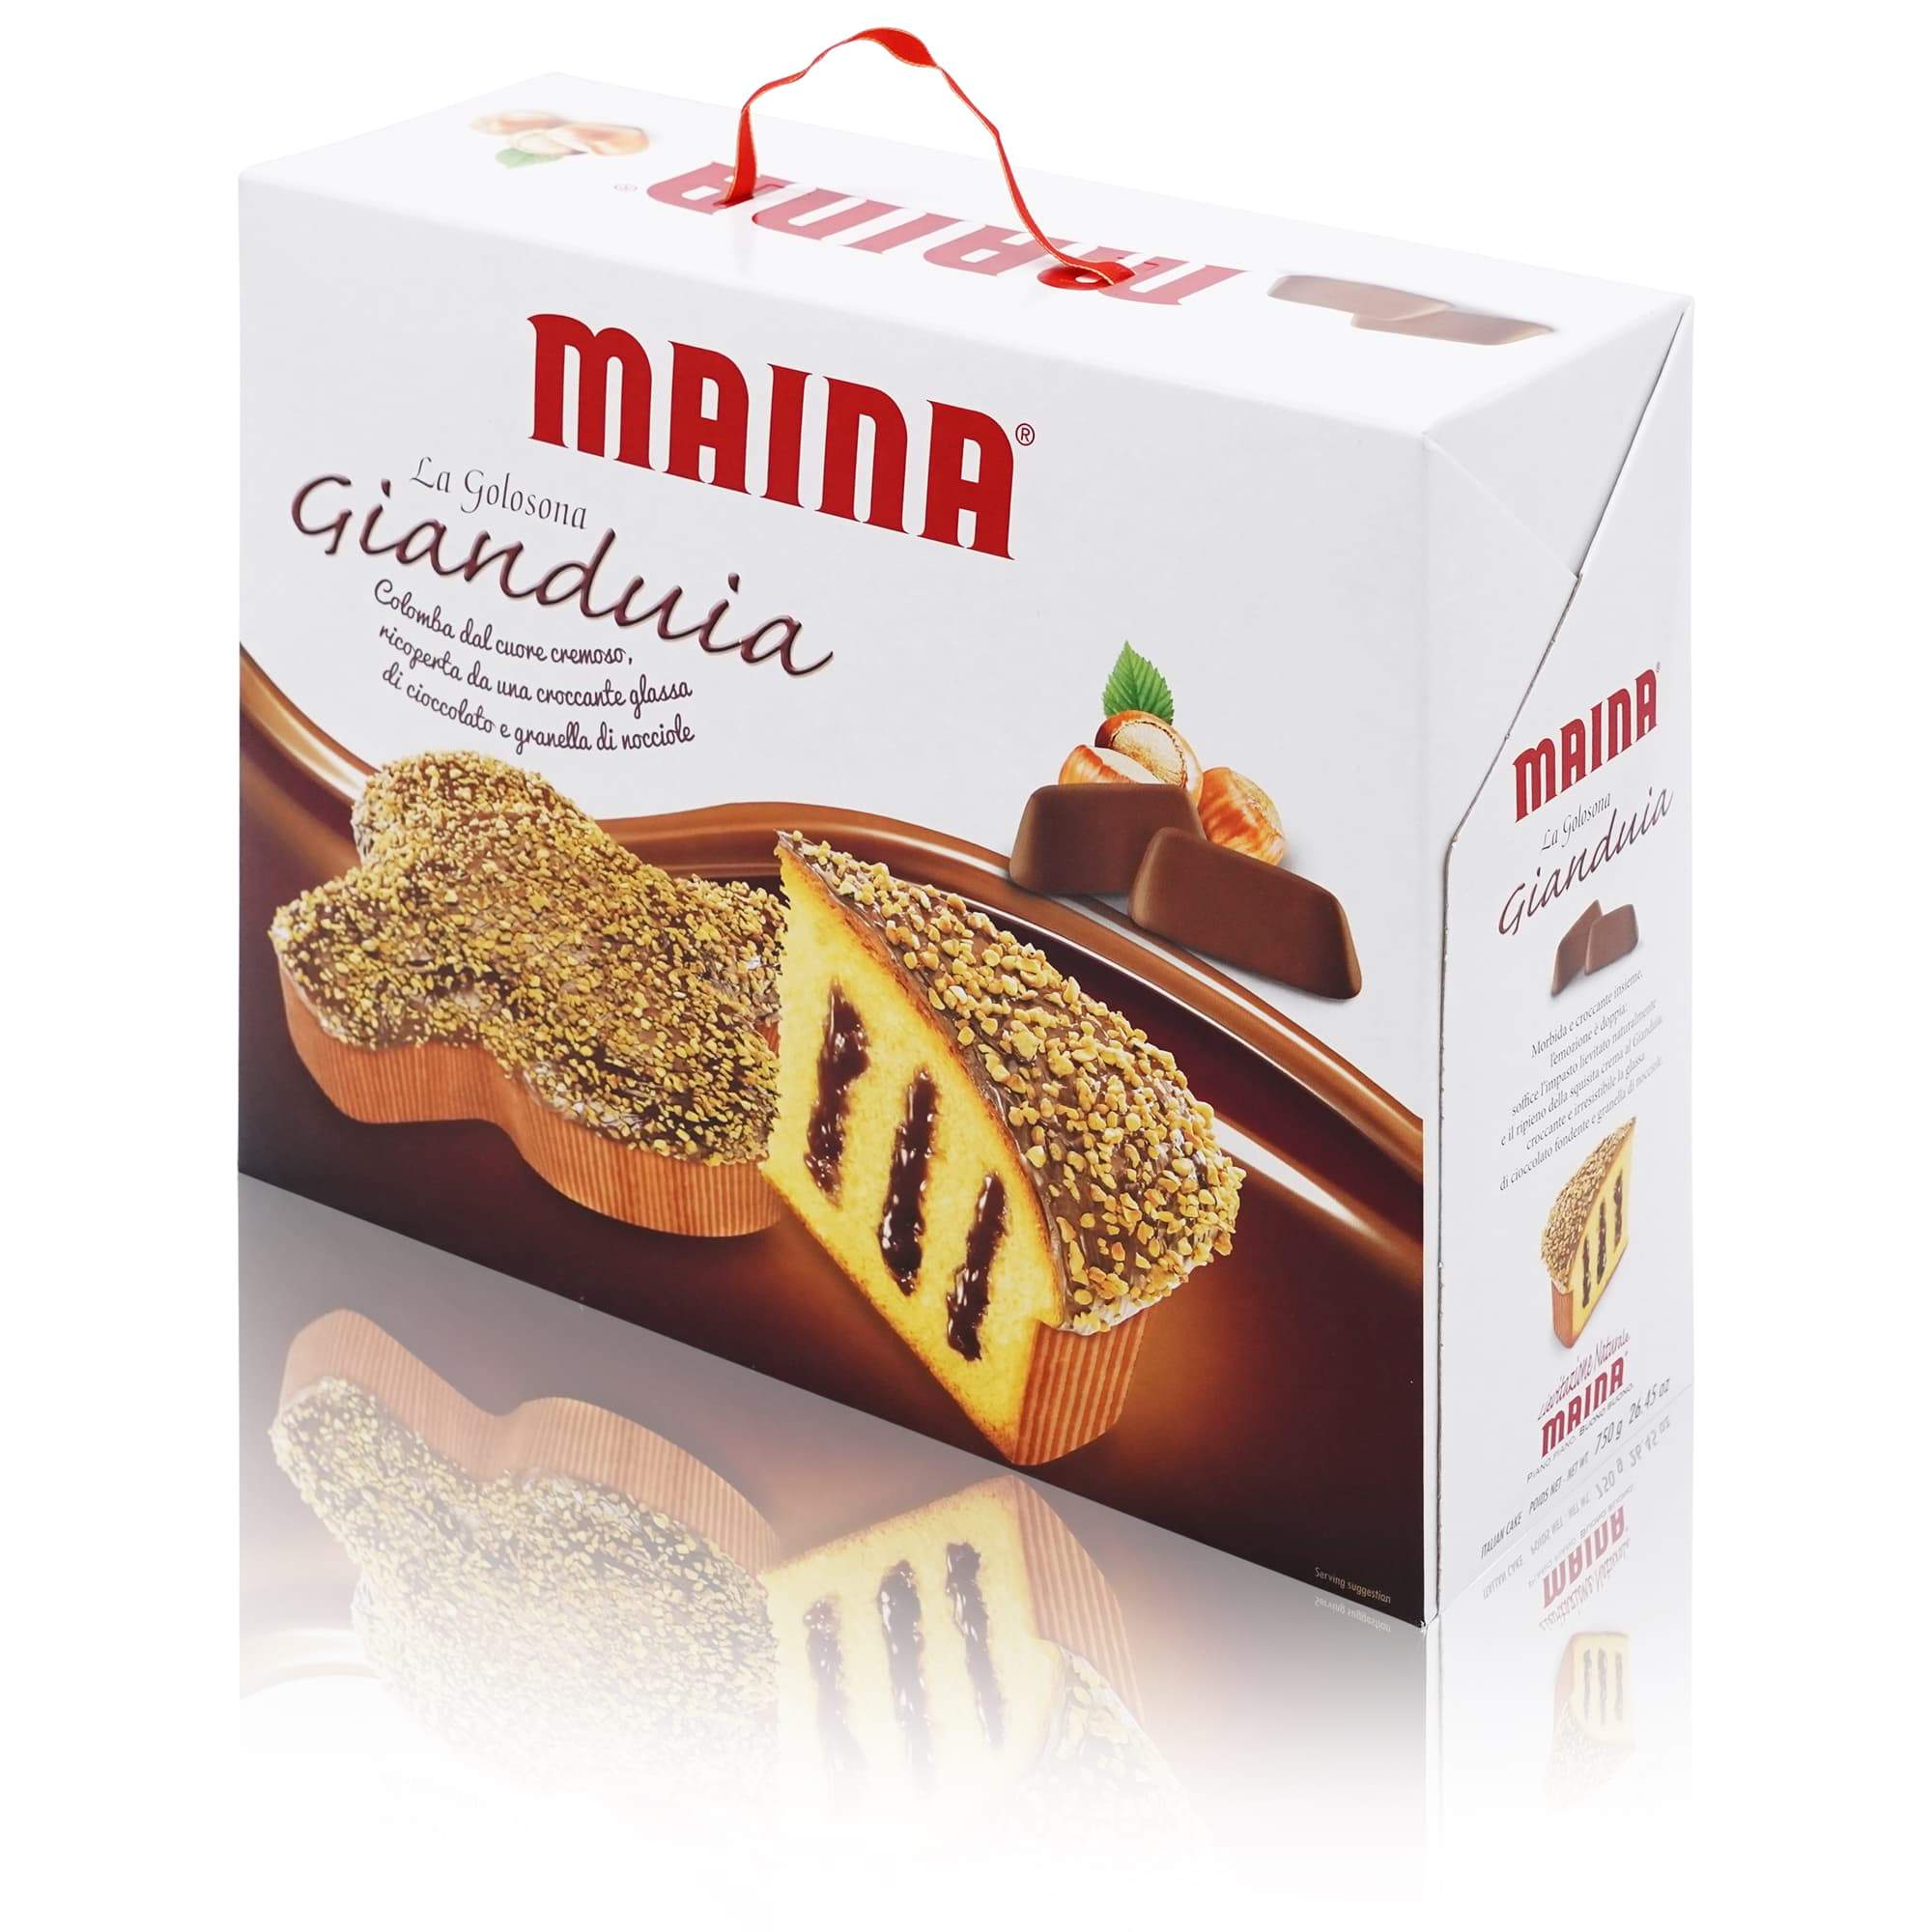 MAINA Colomba farcita al Gianduia – Osterkuchen mit Gianduja - 0,75kg